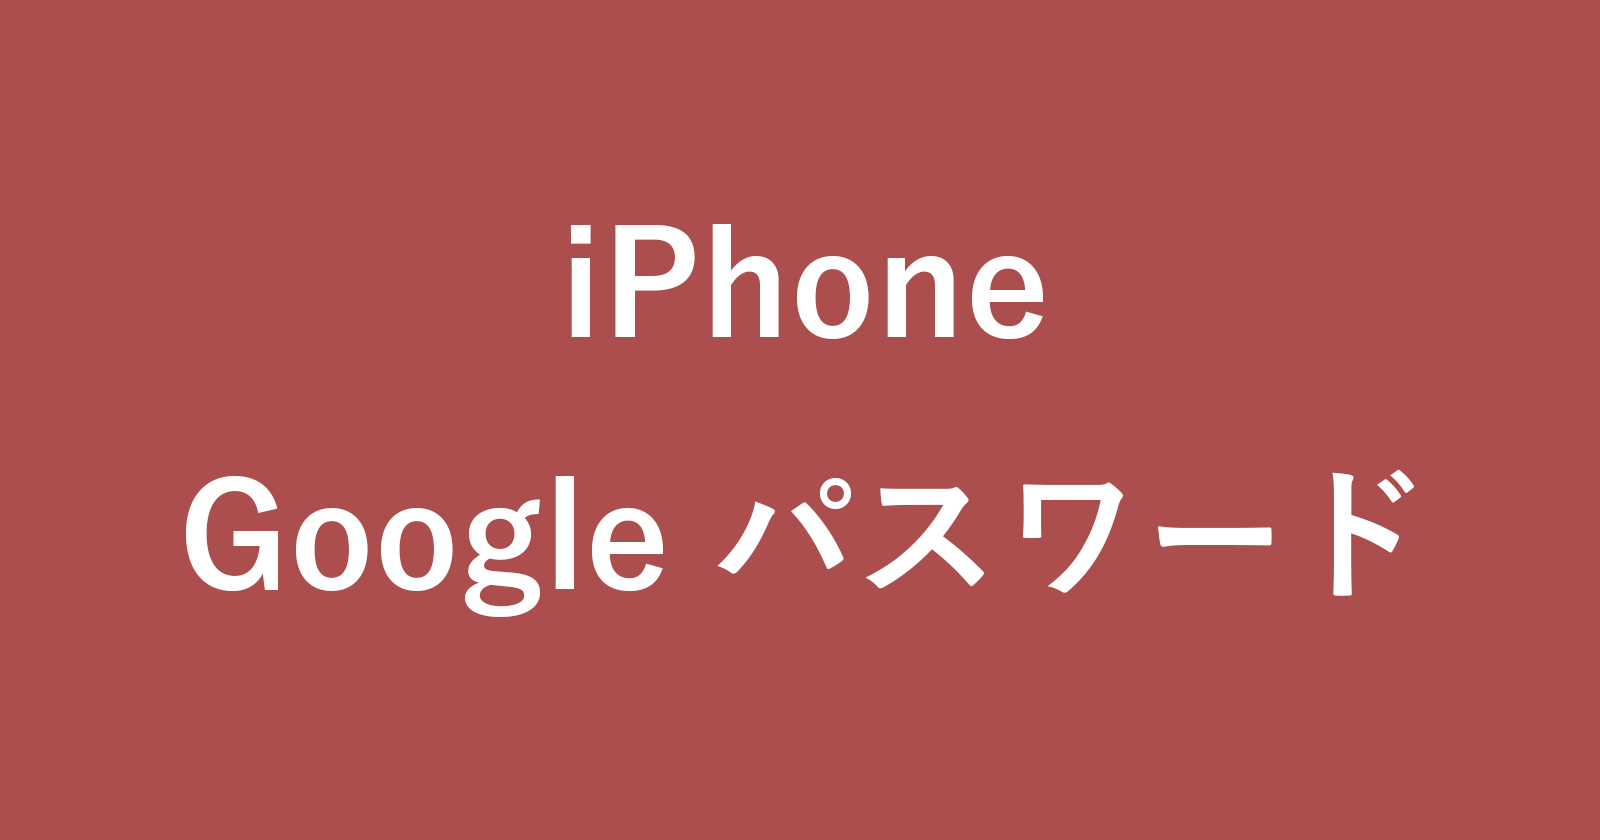 iphone google password